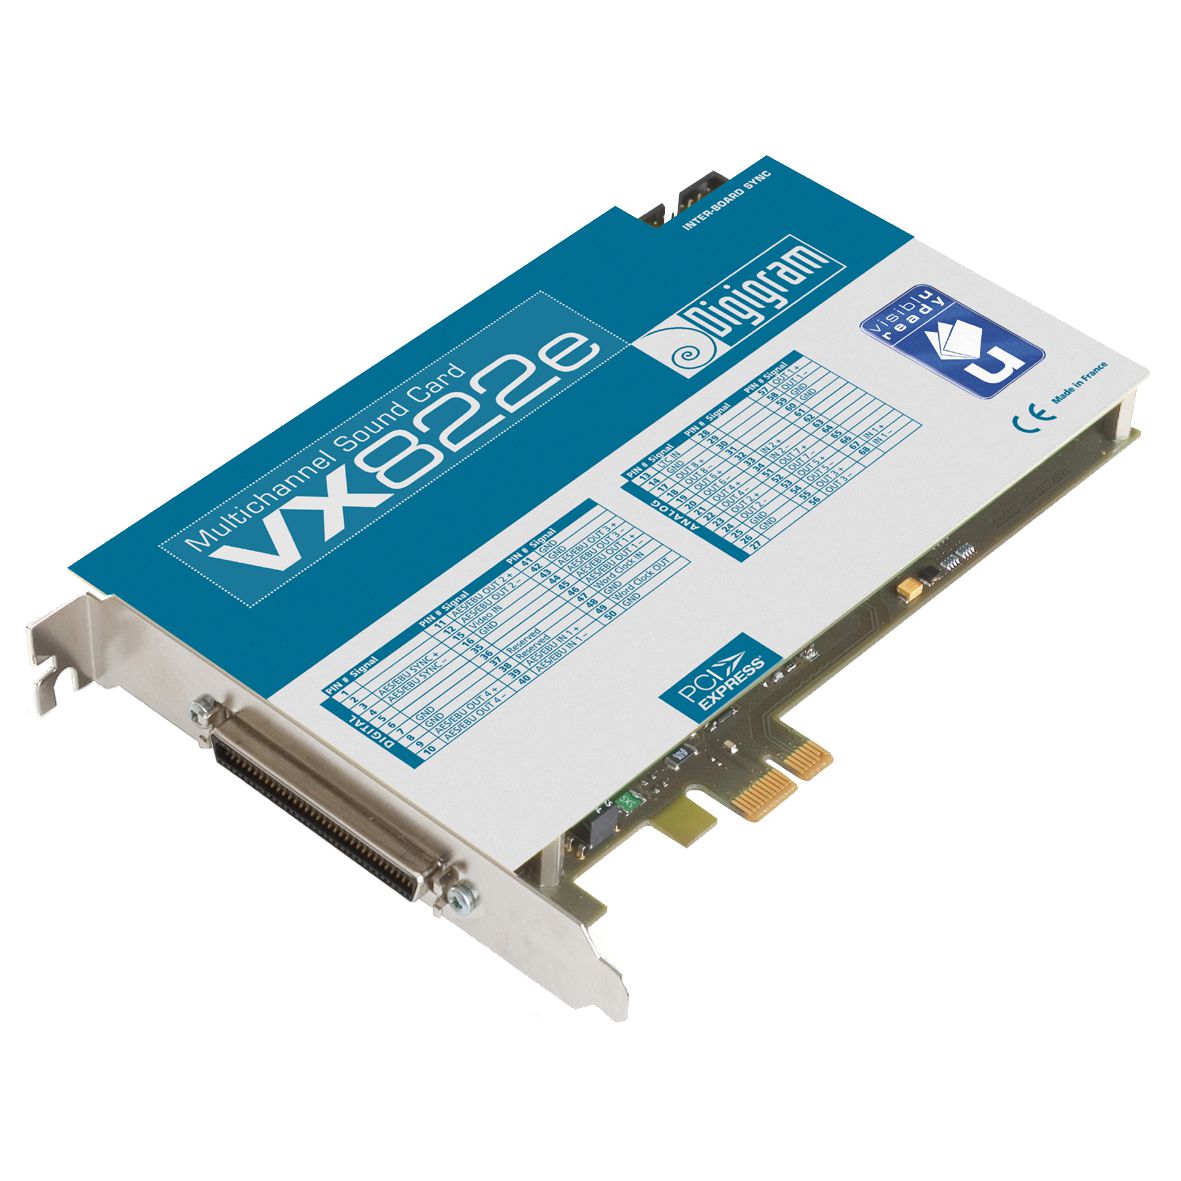 Вб кард. Digigram vx222e. Waveterminal PCI Digital Audio. 10 Outputs Audio Card. Avukavaja karta Digigram.